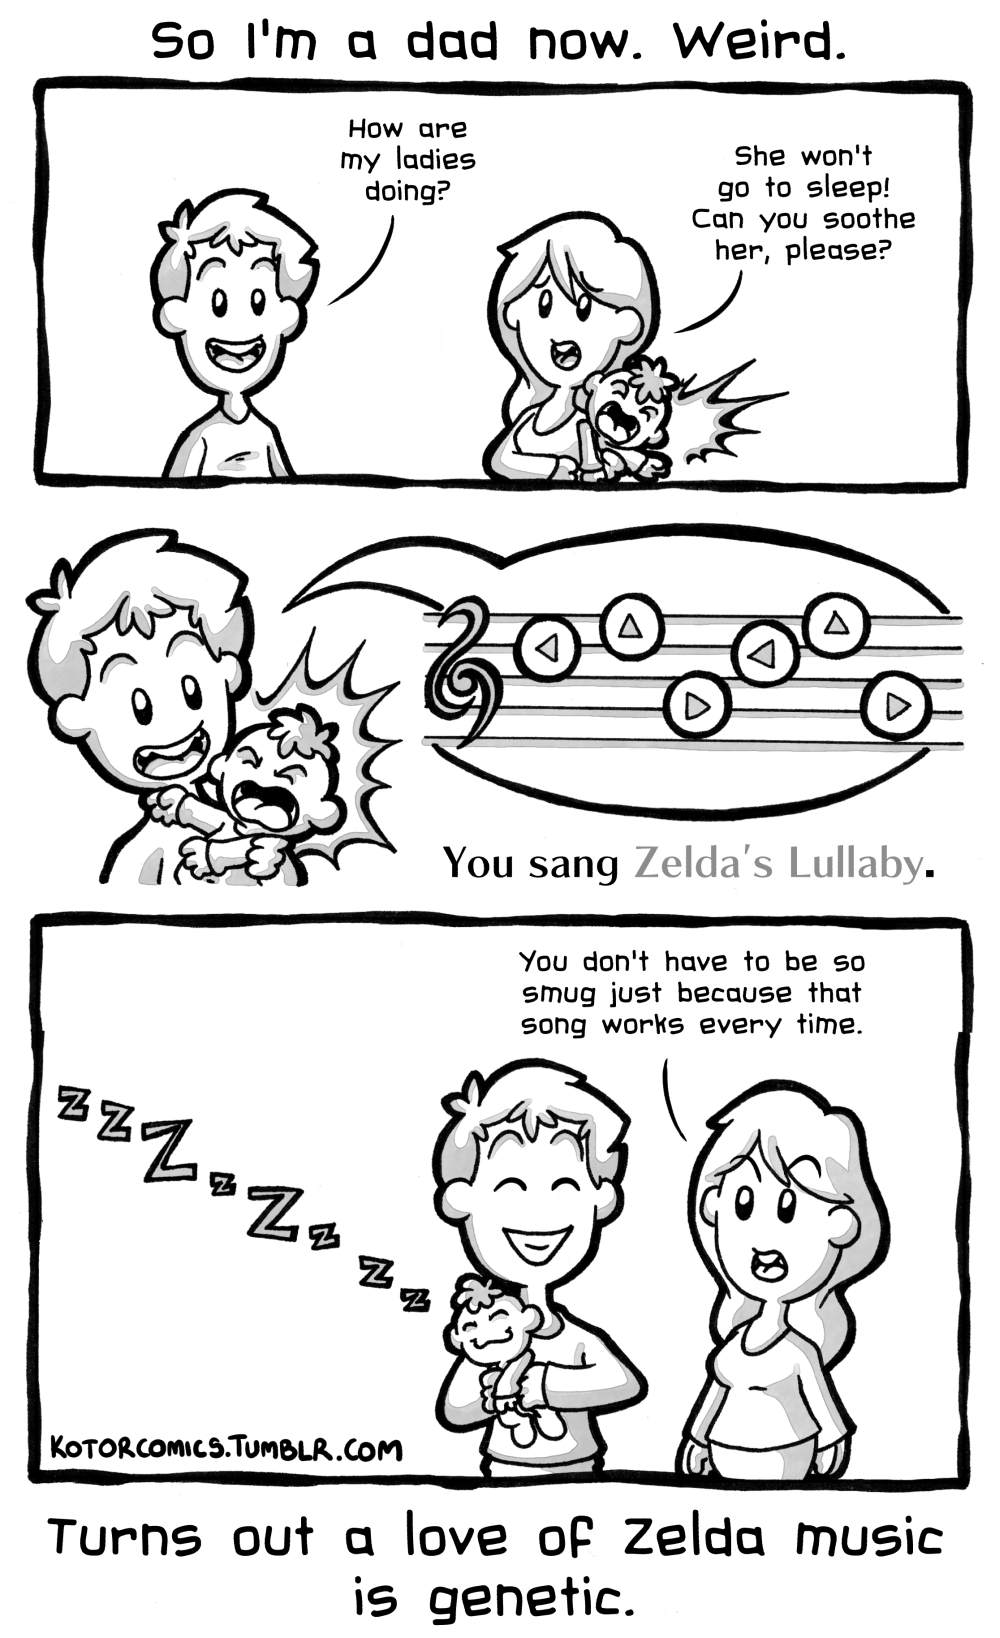 The Legend of Zelda: Ocarina of Time - Zelda's Lullaby (Ocarina Song) 